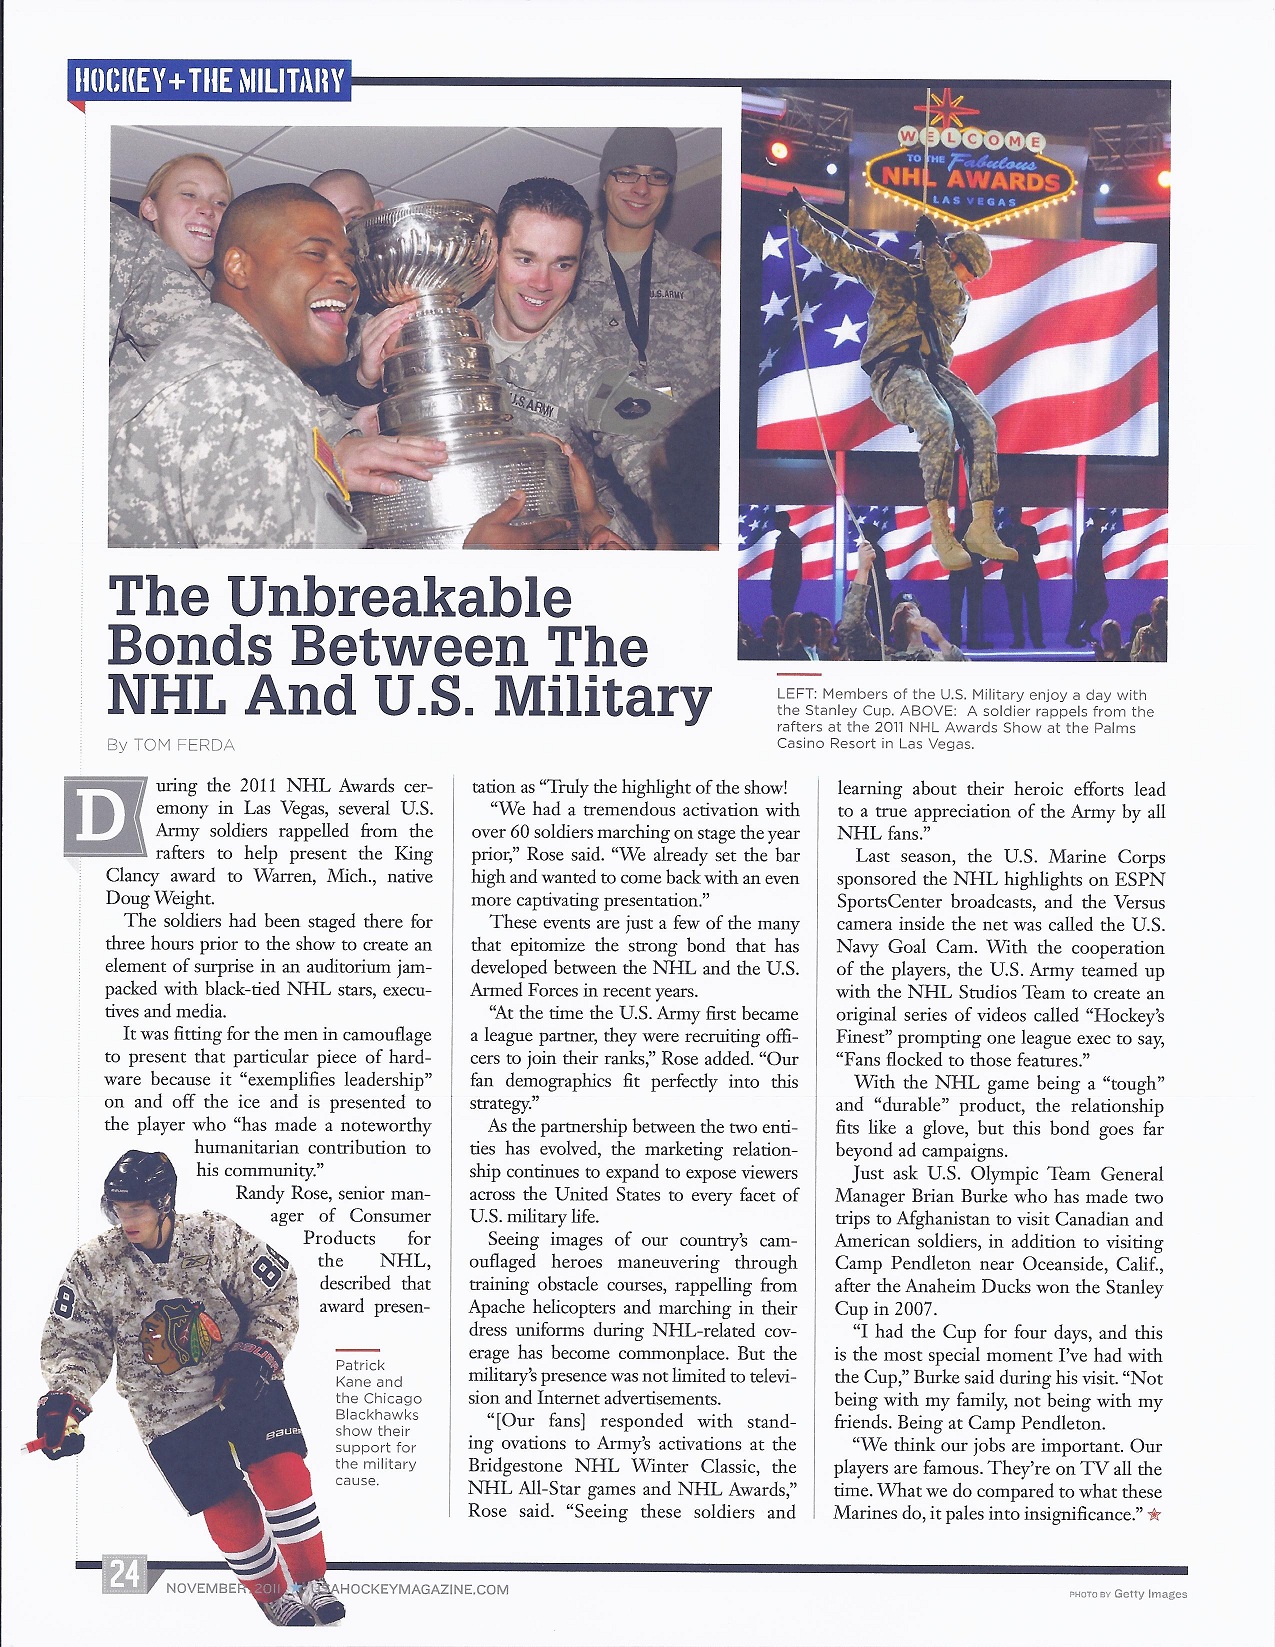 USAH Veterans Day Article